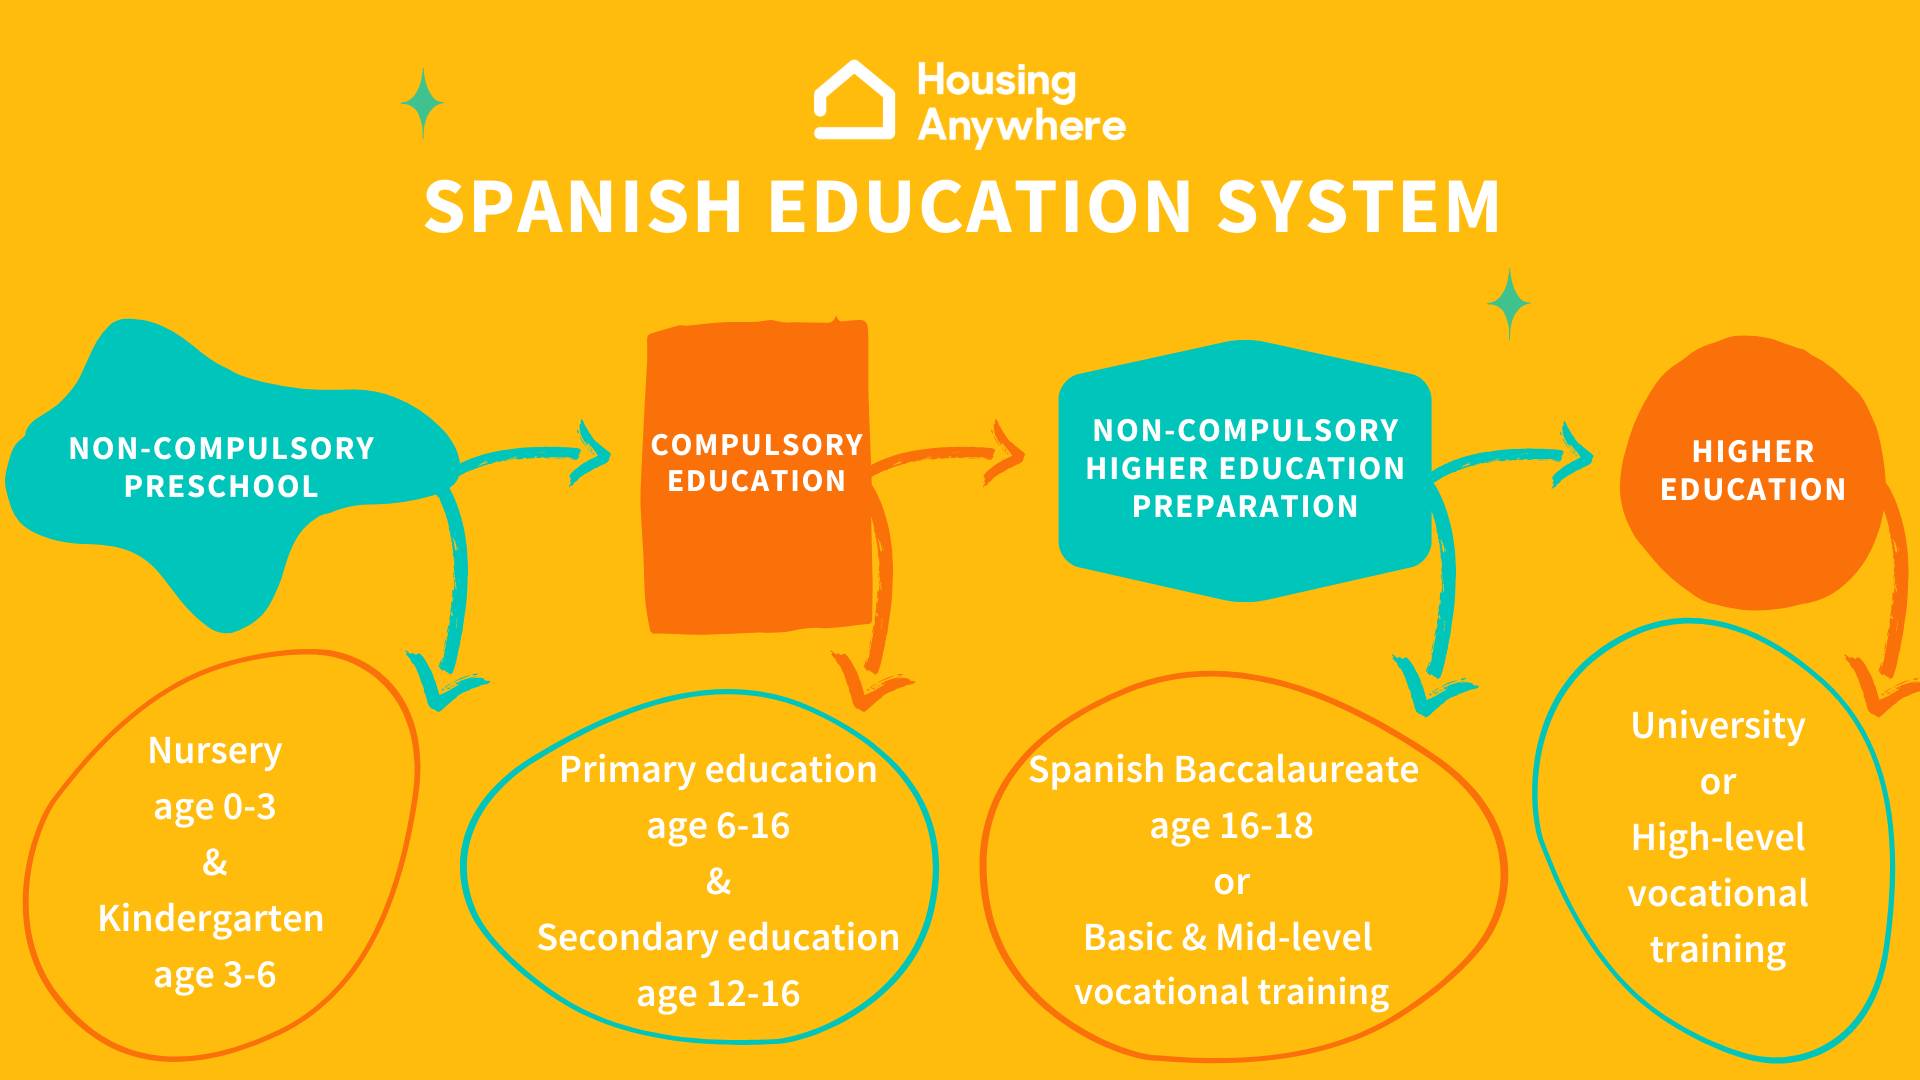 spanish education system presentation